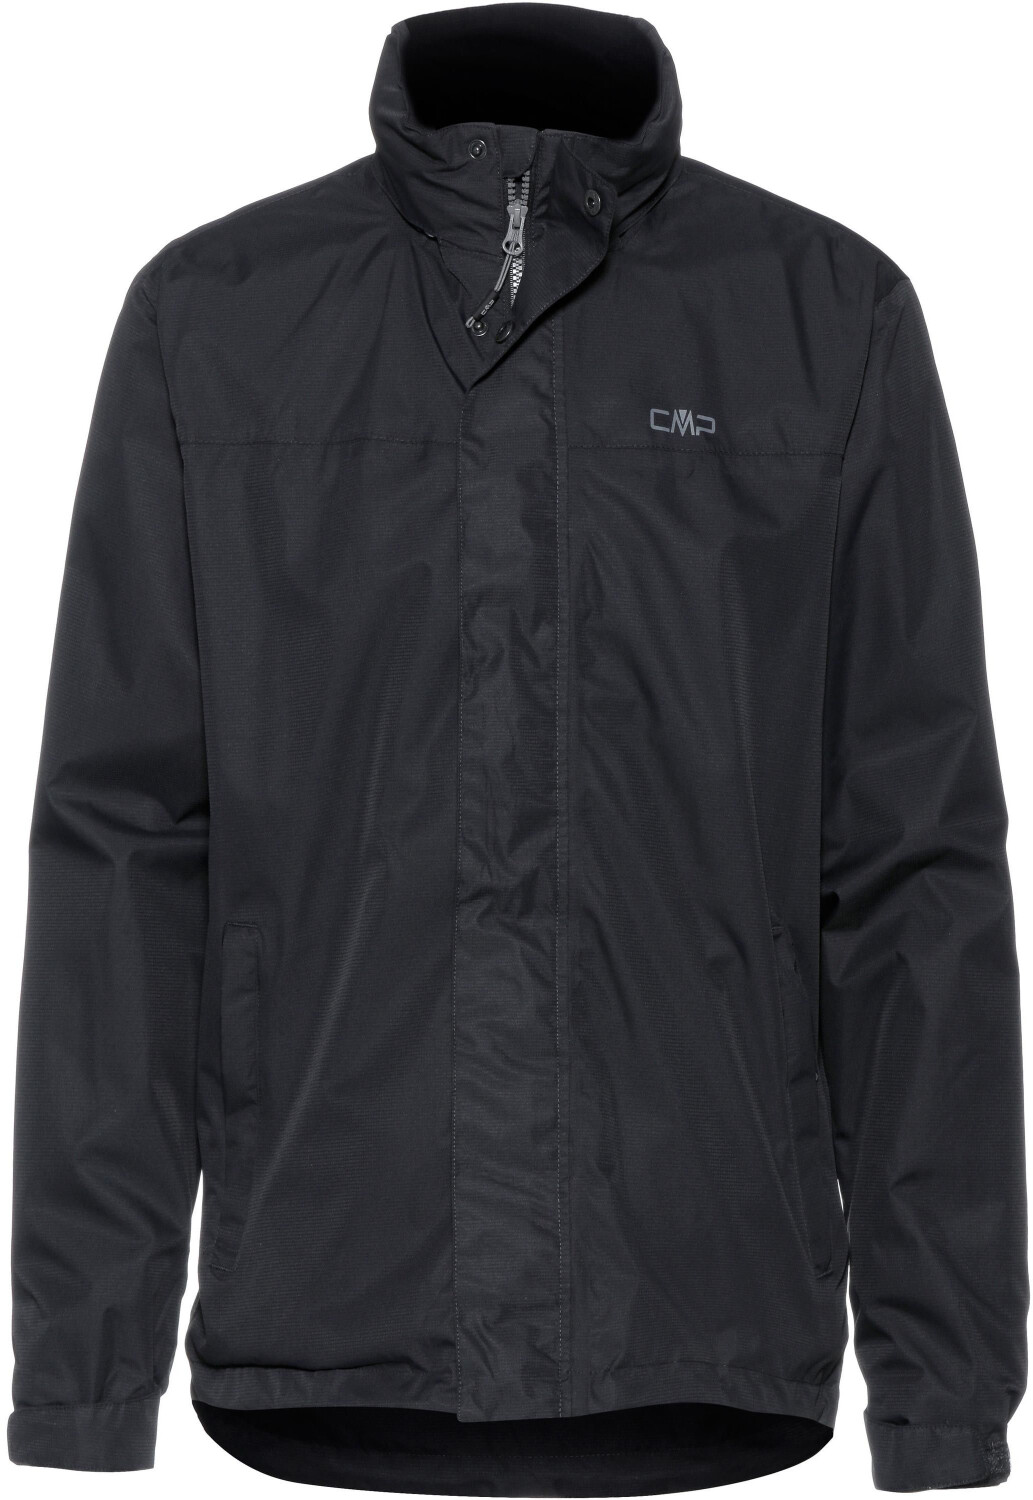 CMP Waterproof Jacket in ab € Preisvergleich Ripstop fabric | (39X7367) bei 21,99